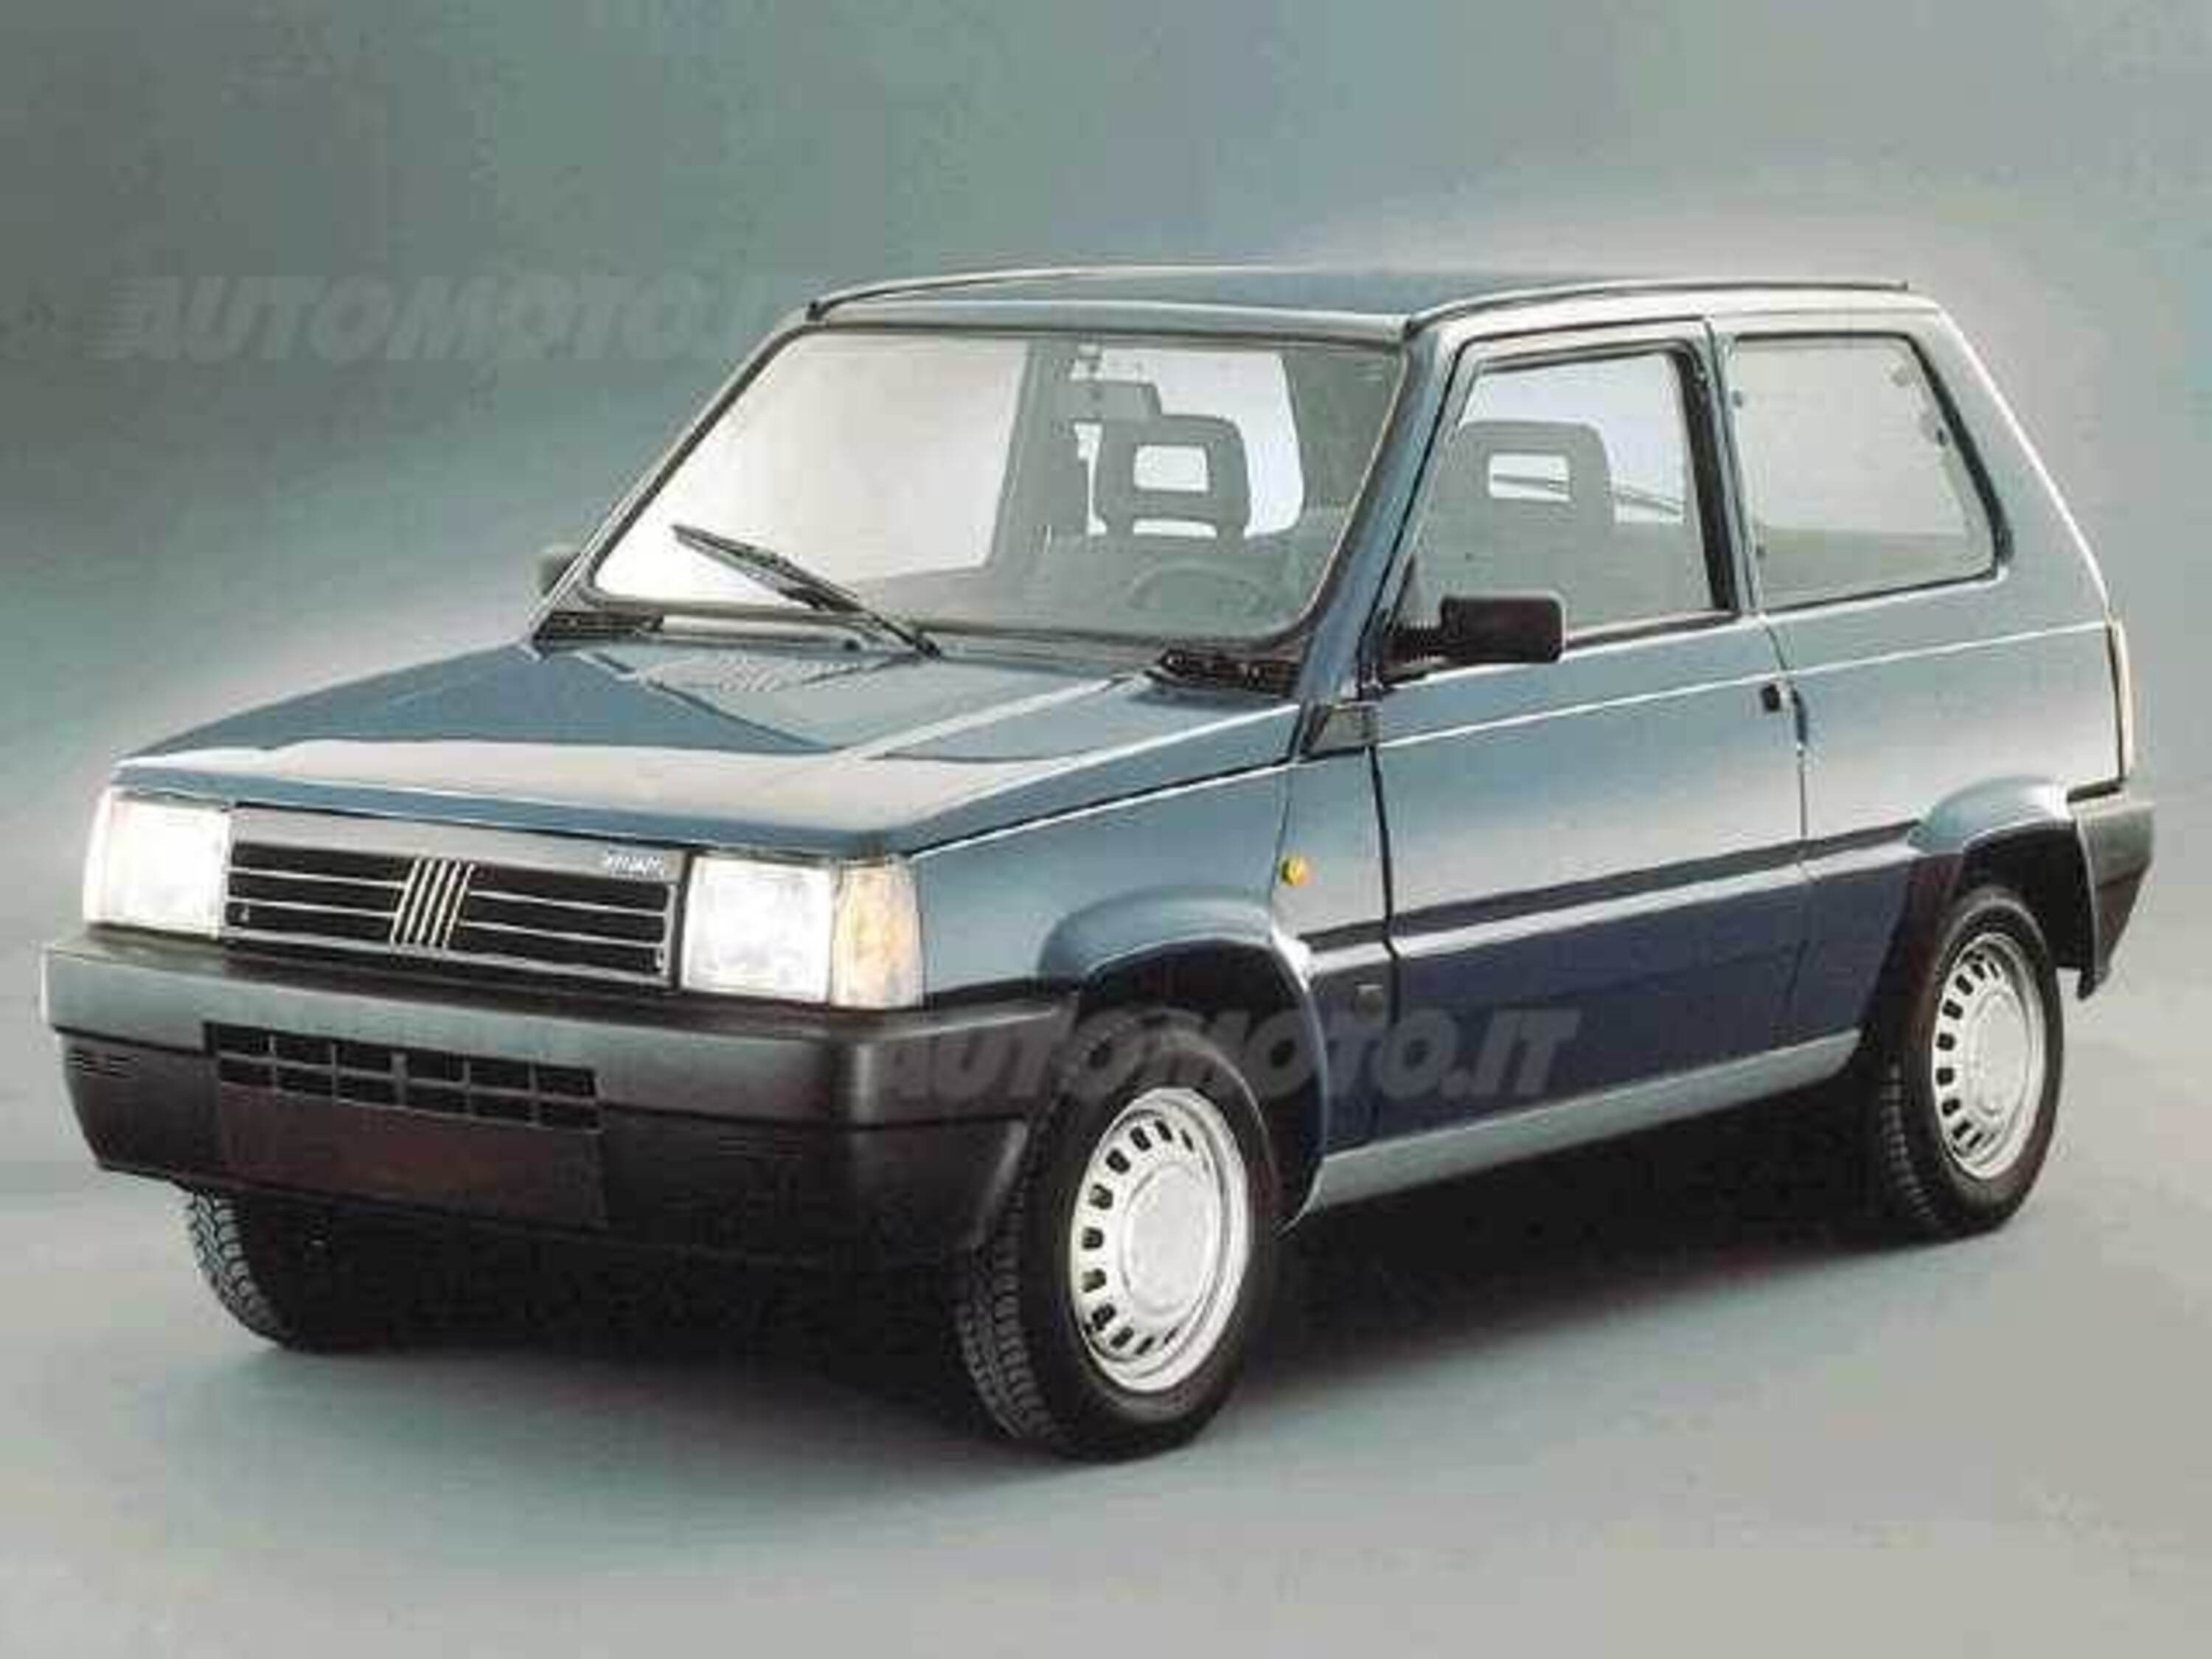 Fiat Panda 900 i.e. cat L